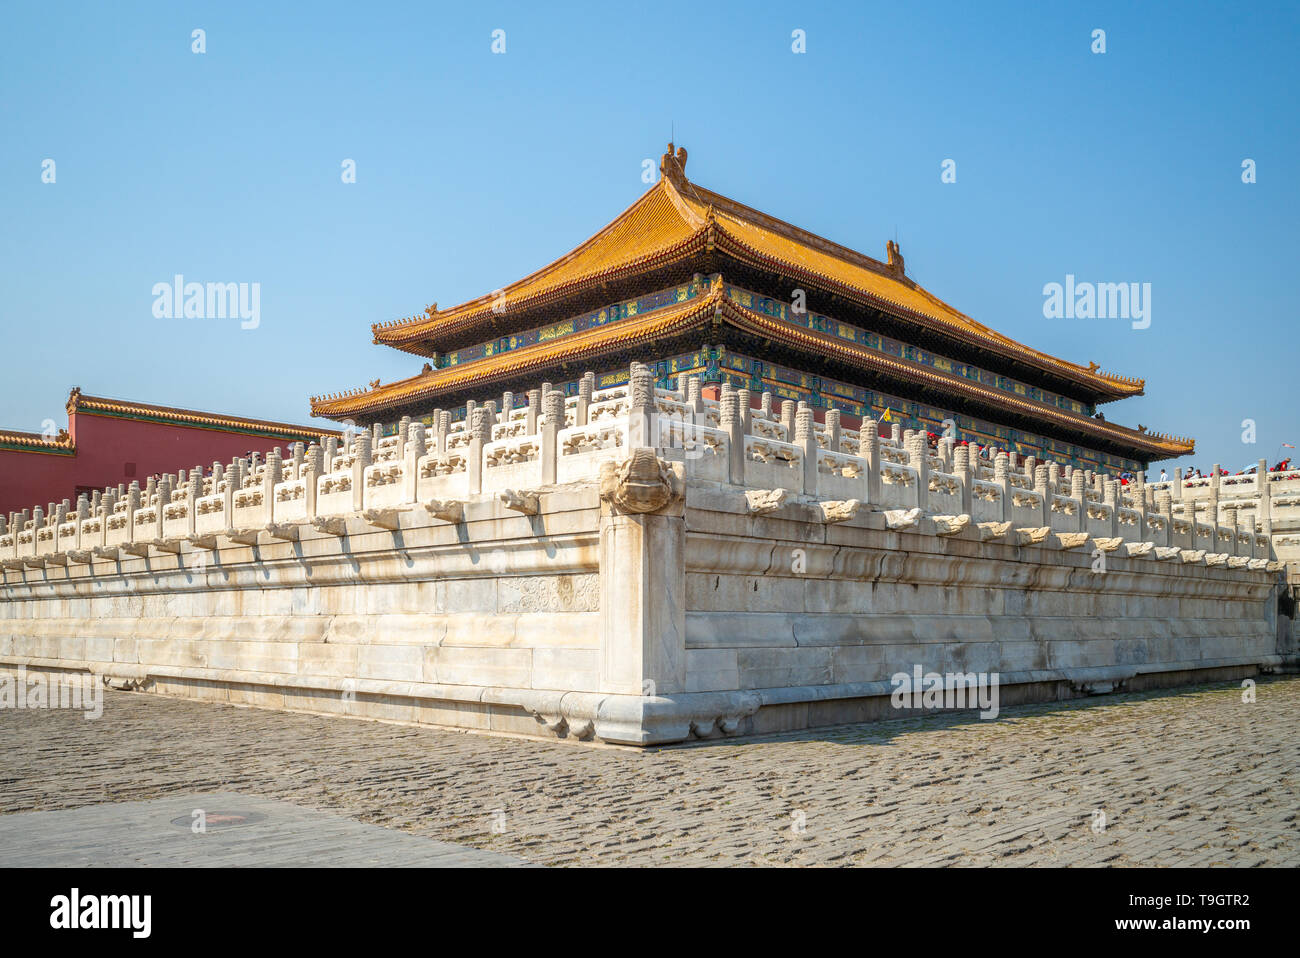 forbidden city in beijing, capital of china Stock Photo